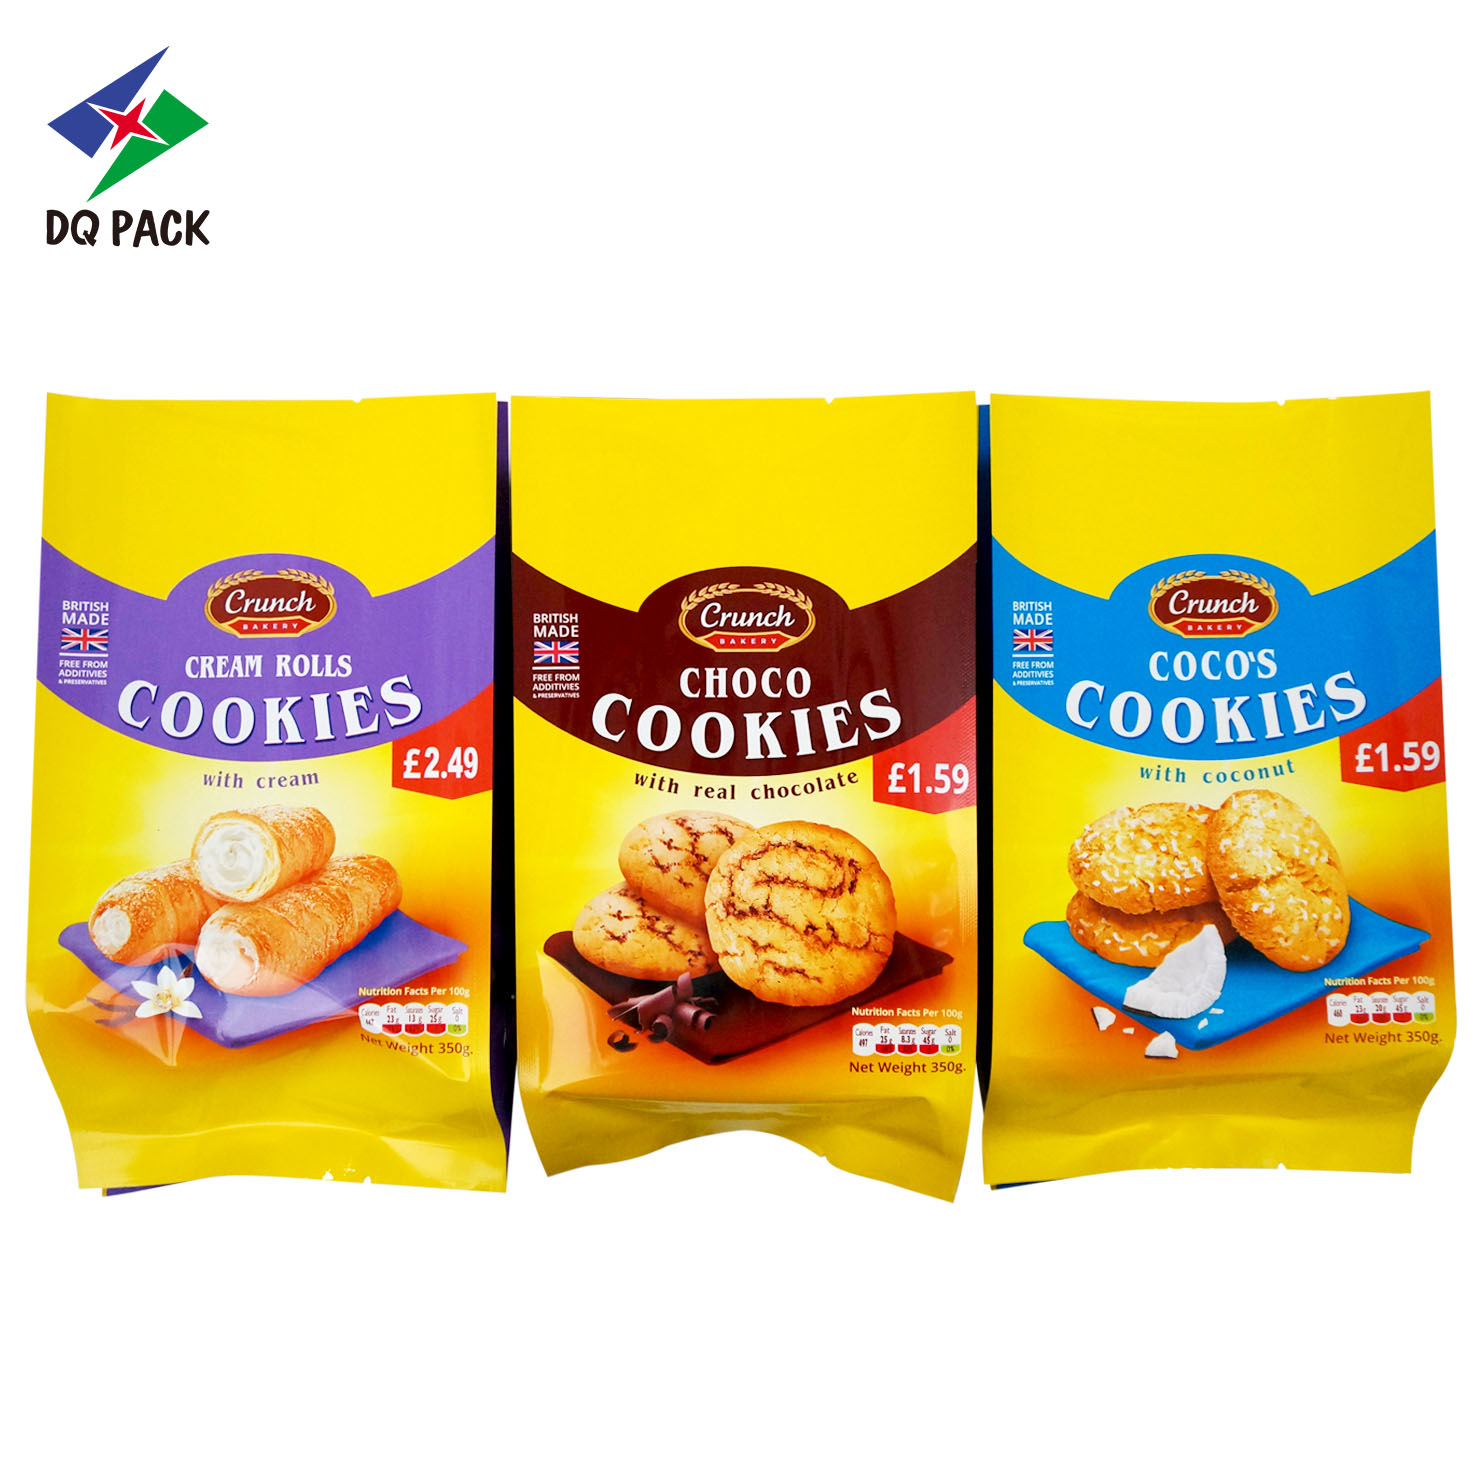 DQ PACK OEM Design 350g Cookies Side Gusset Bag Plastic Heat Seal Snacks كيس التغليف حقيبة مايلر